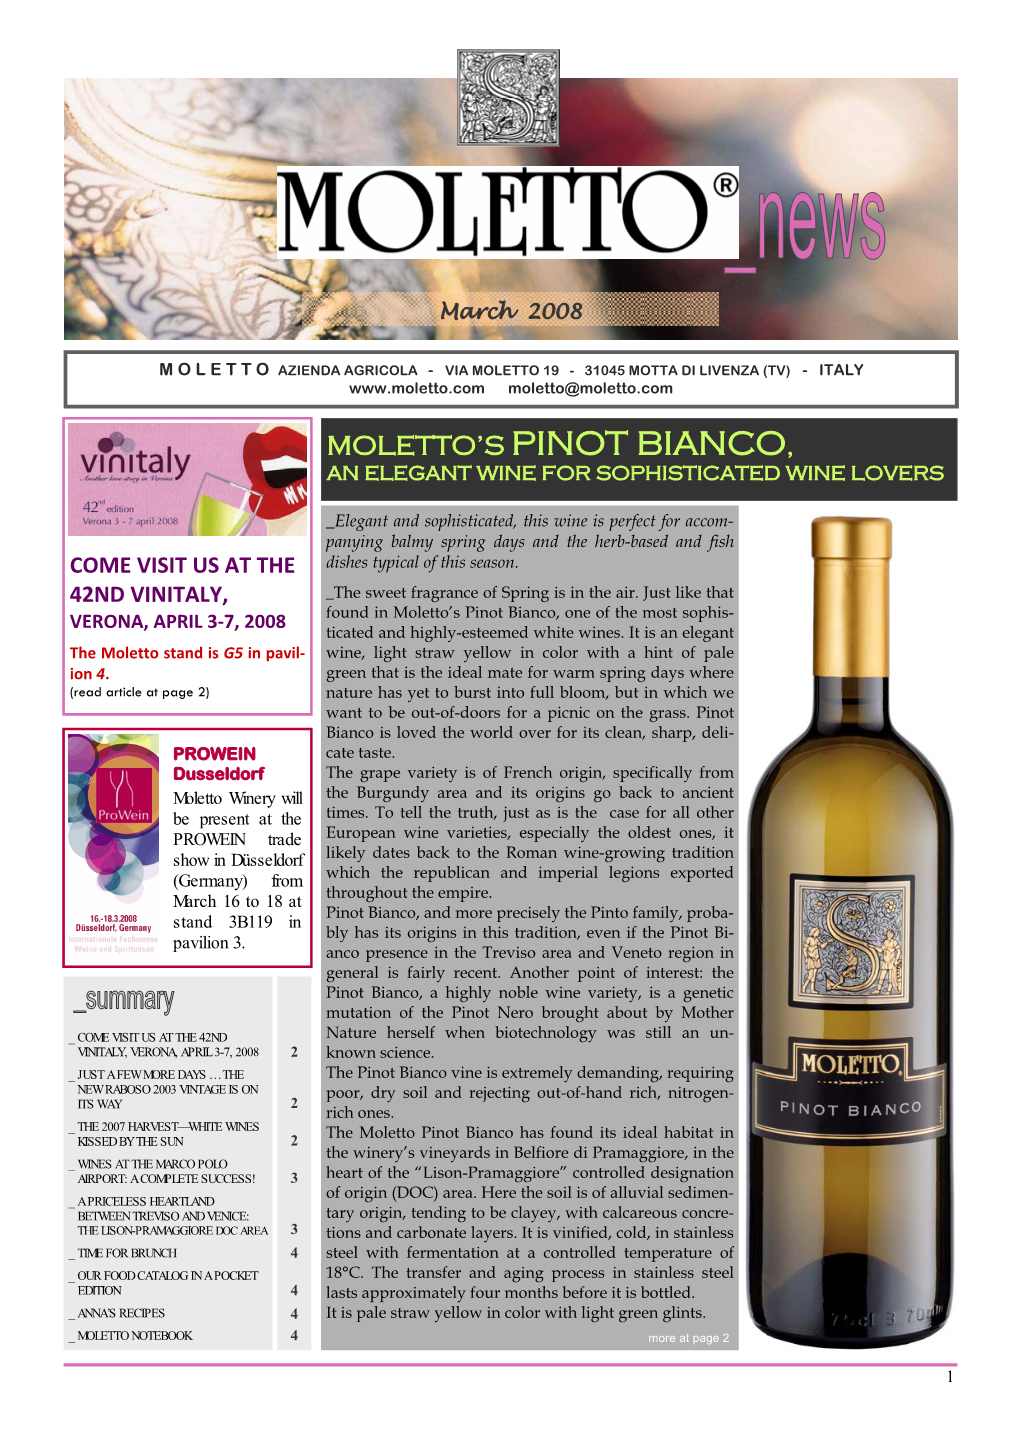 Moletto's Pinot Bianco